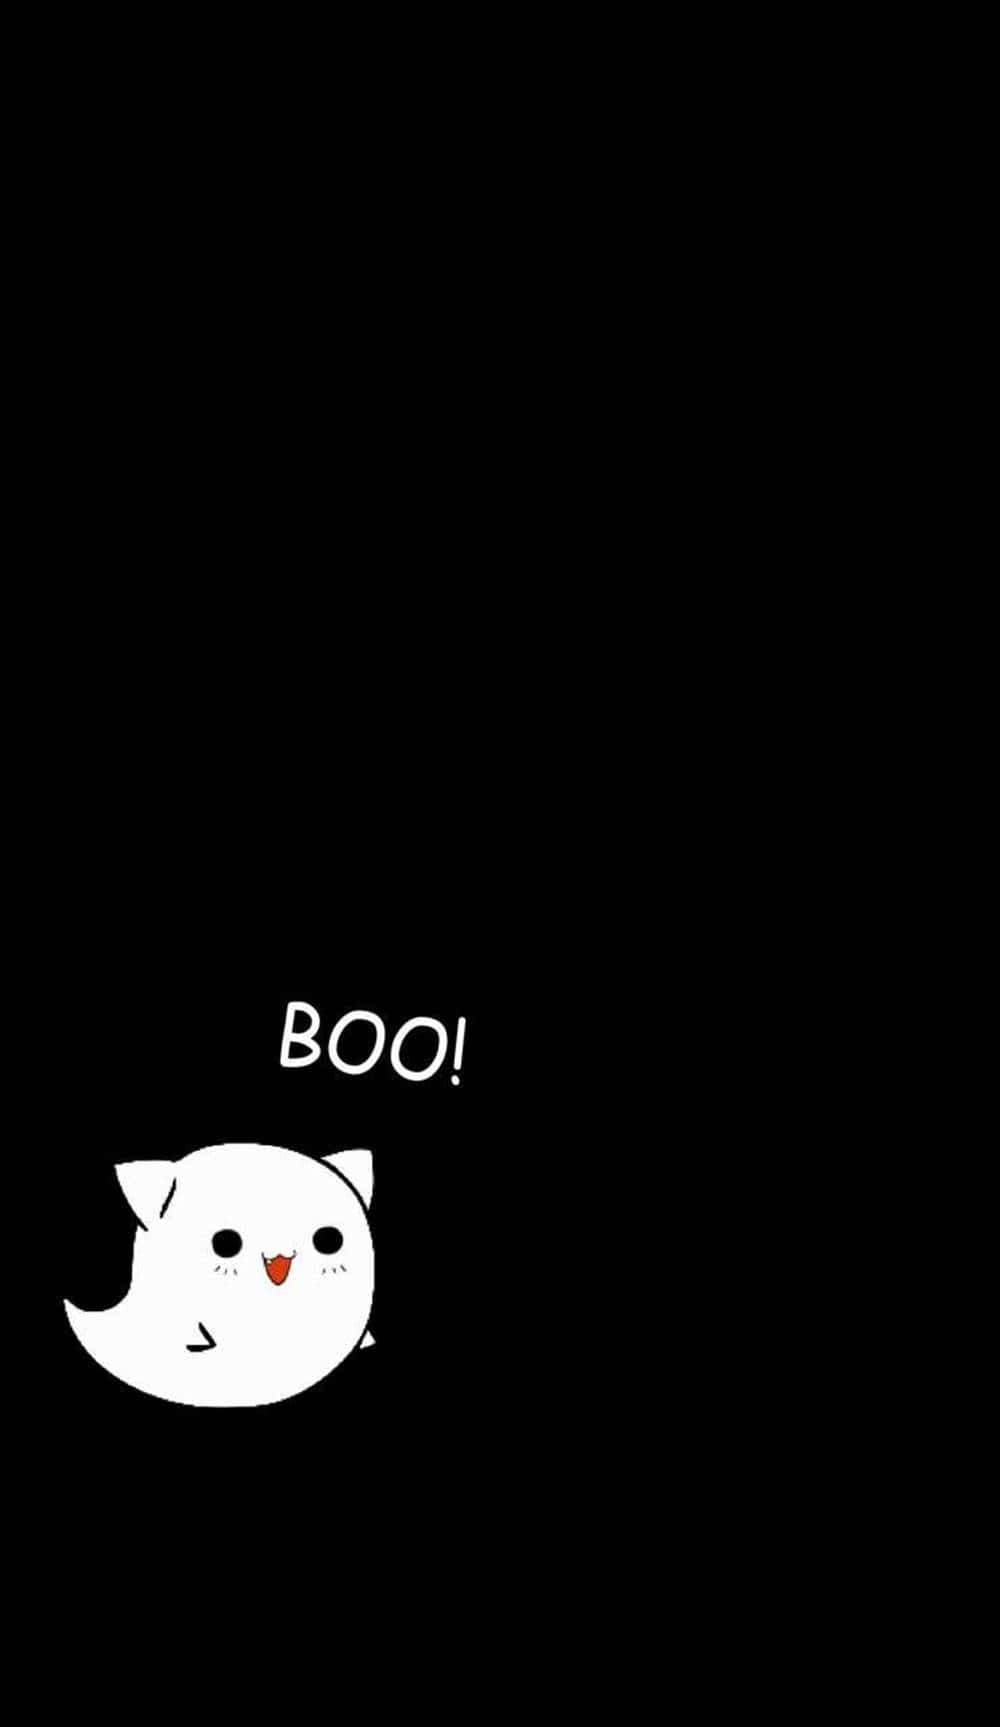 Cute Ghost Boo Black Background Wallpaper